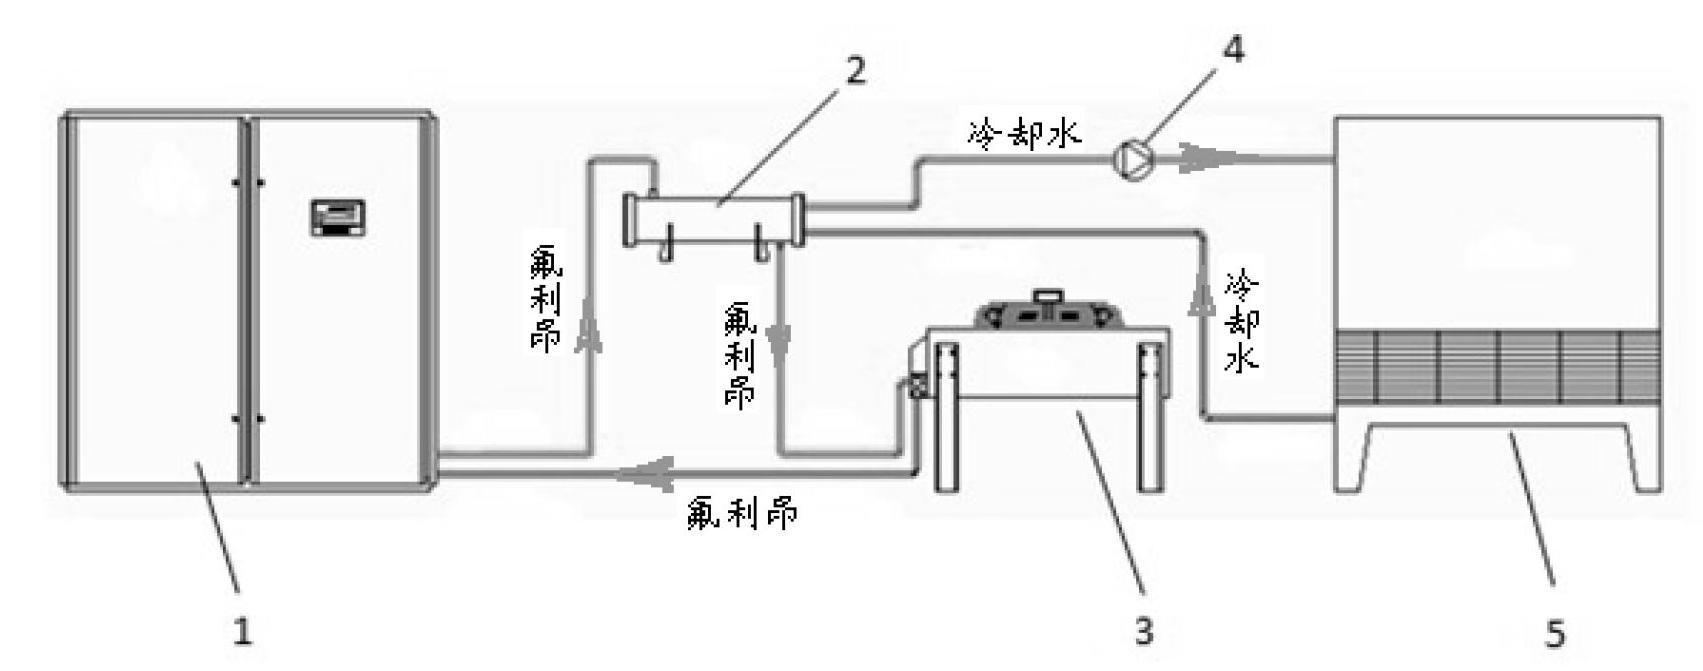 Refrigerating system of air conditioner